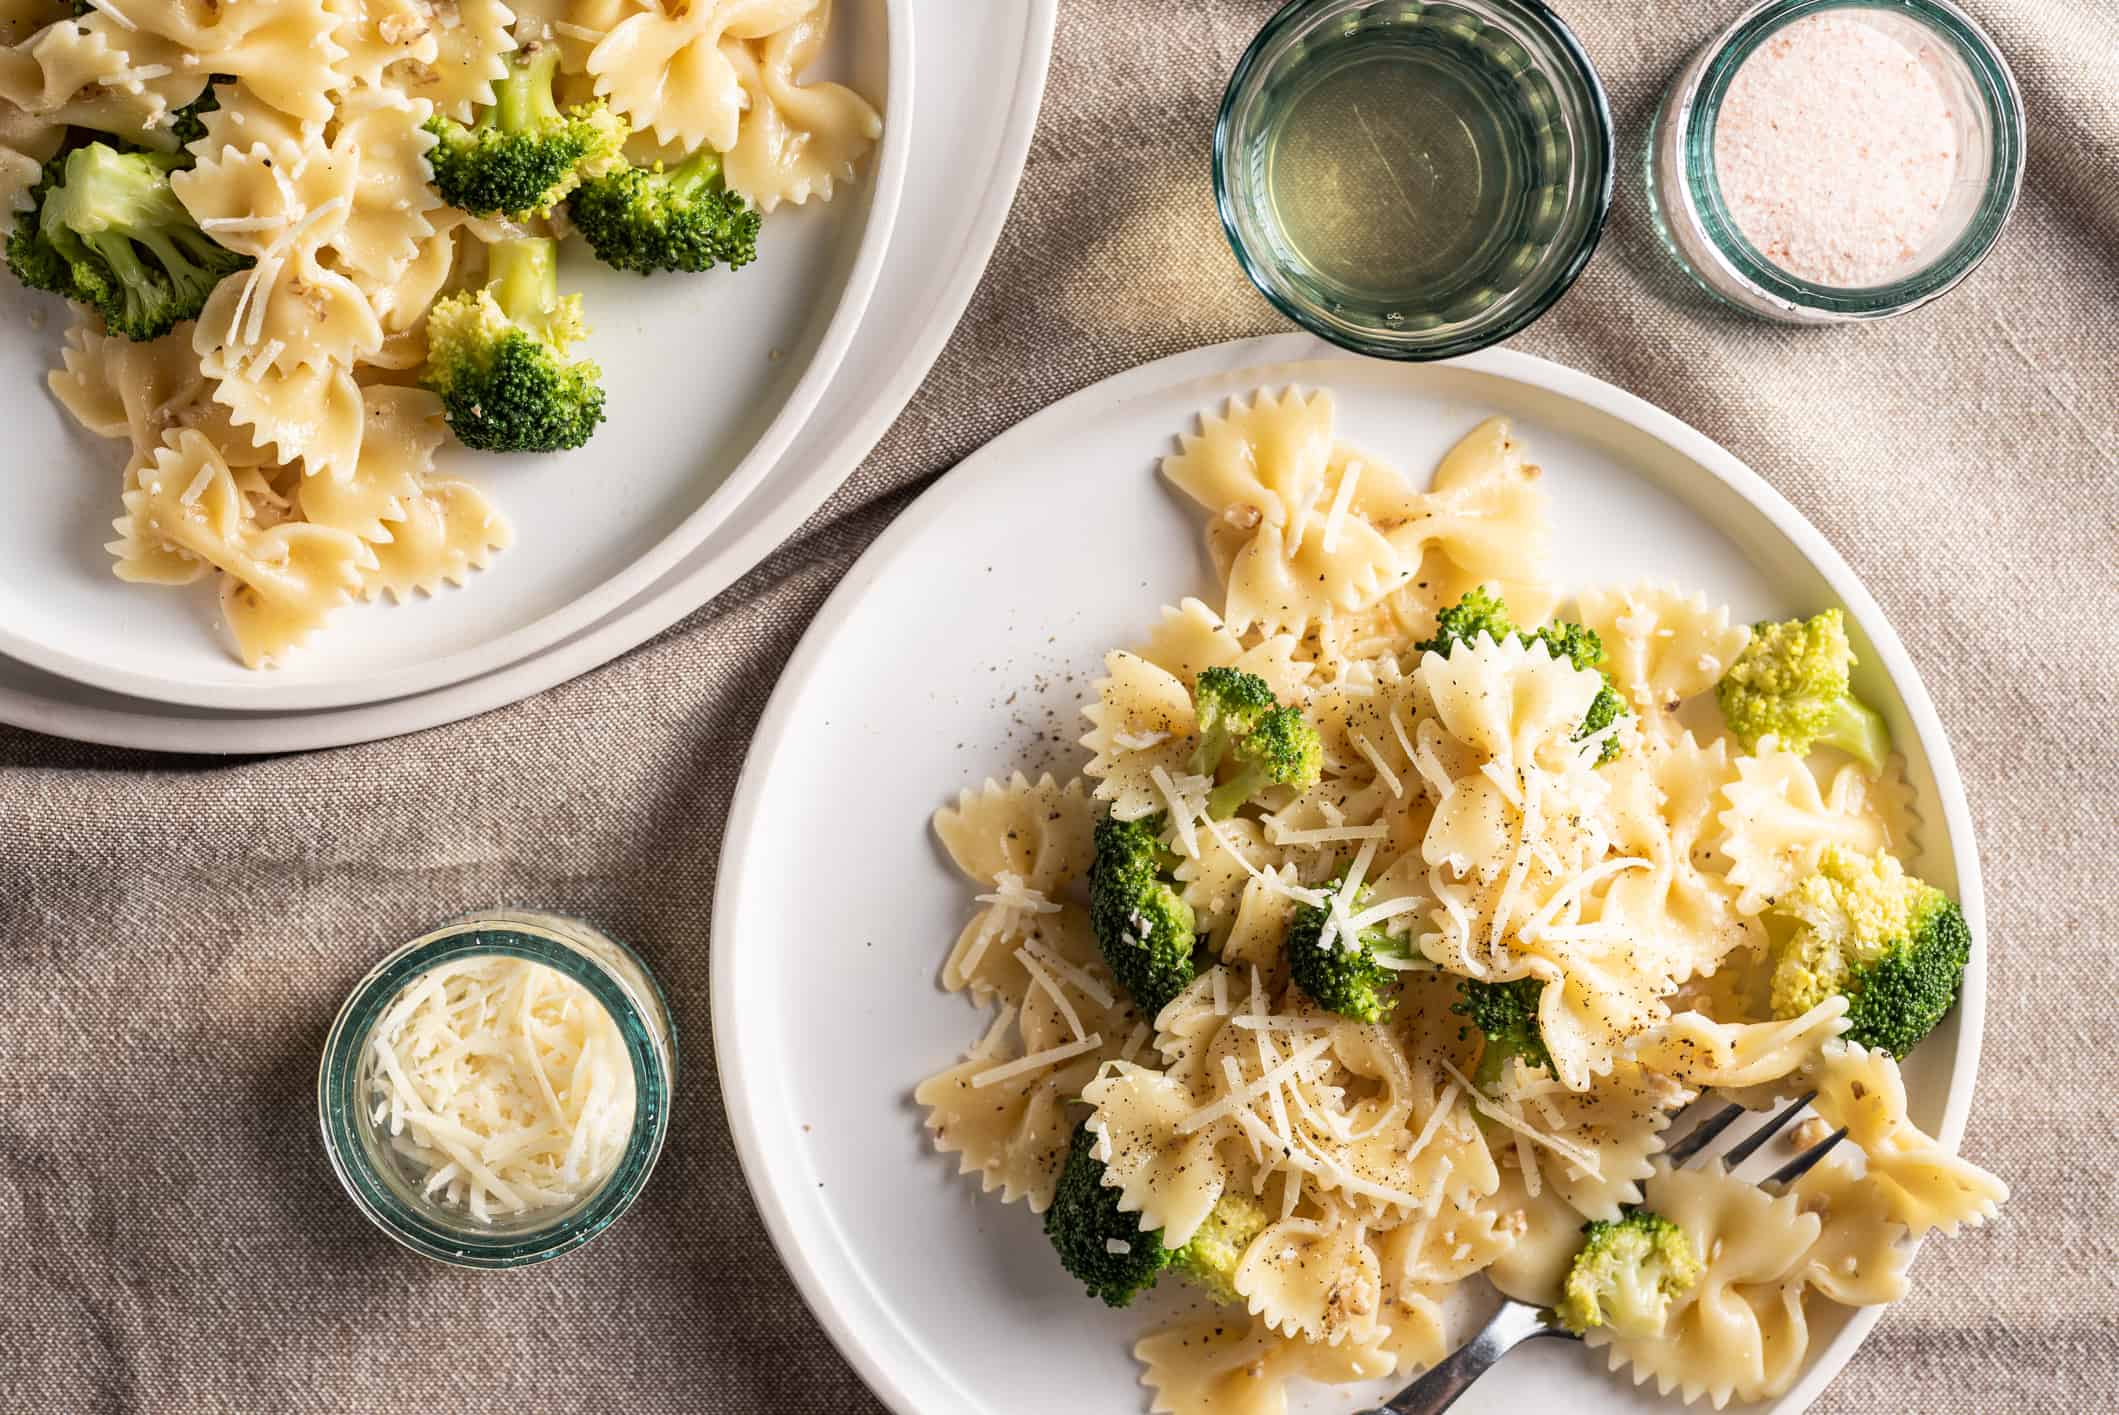 Savory farfalle pasta with walnuts pesto, broccoli and parmesan cheese